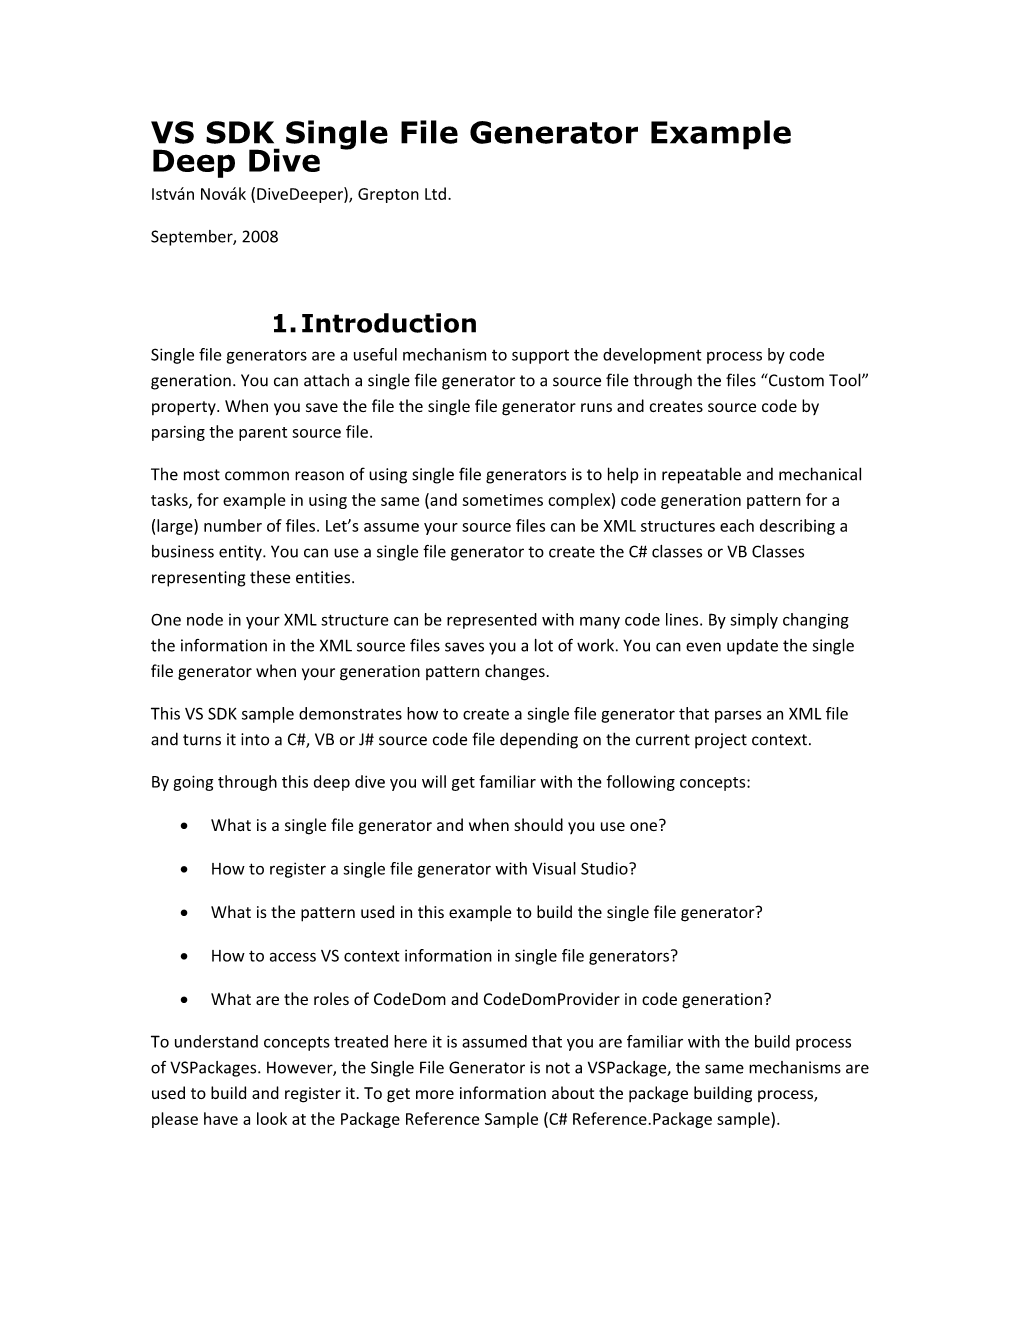 VS SDK Single File Generator Example Deep Dive